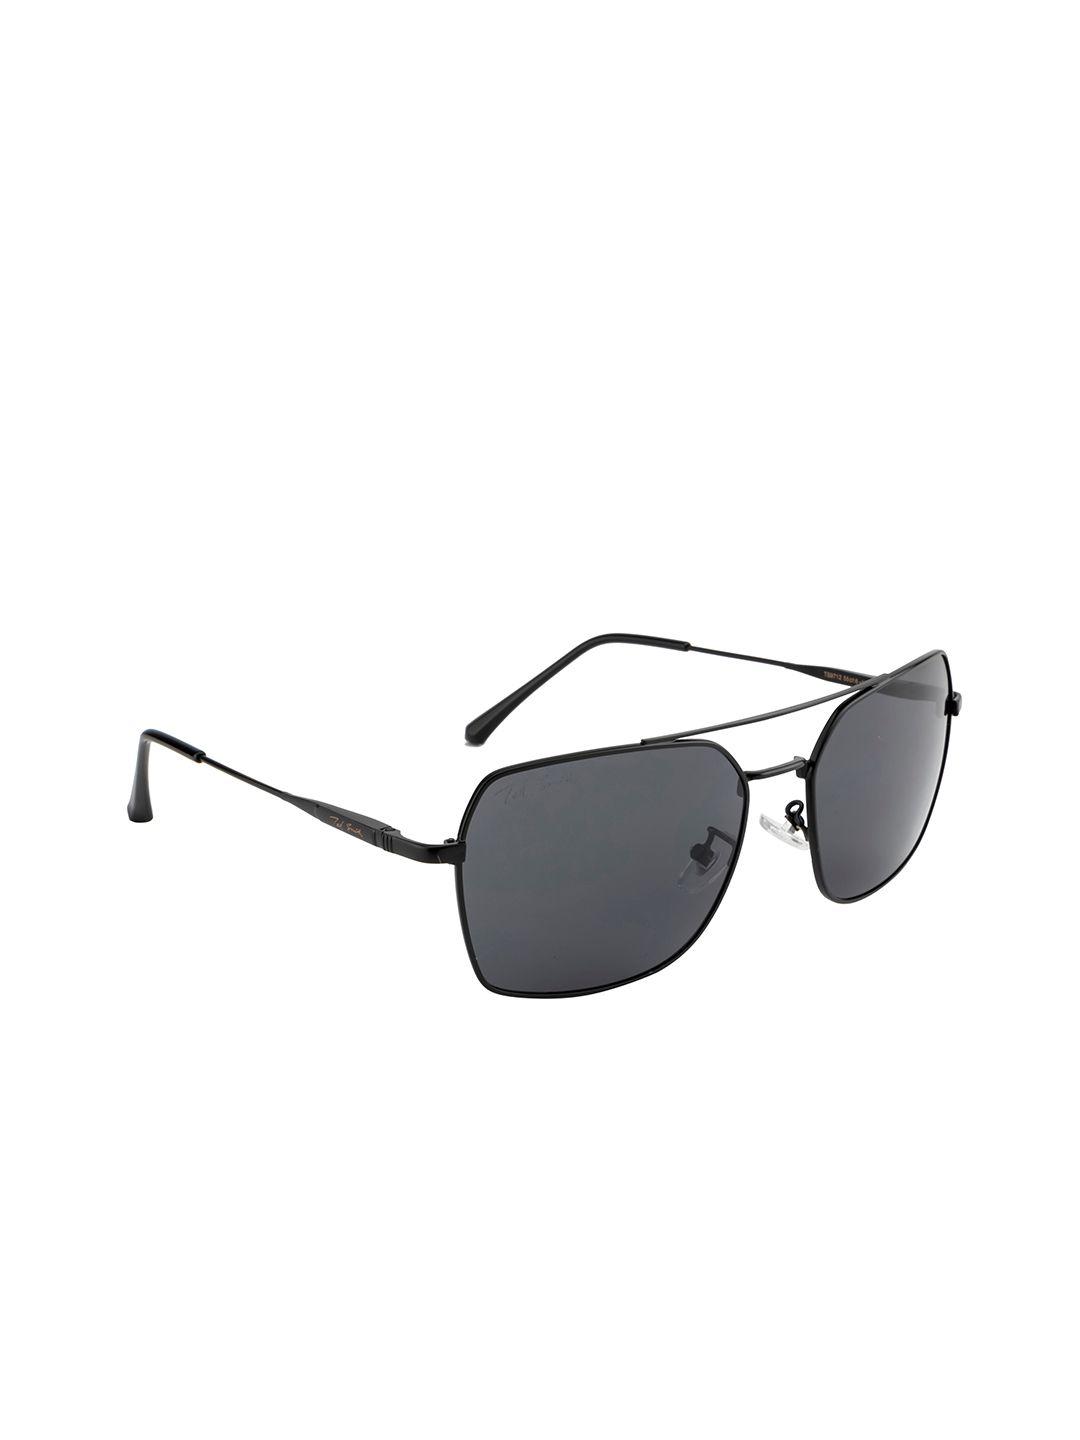 ted smith unisex grey lens & black aviator uv protected lens sunglasses